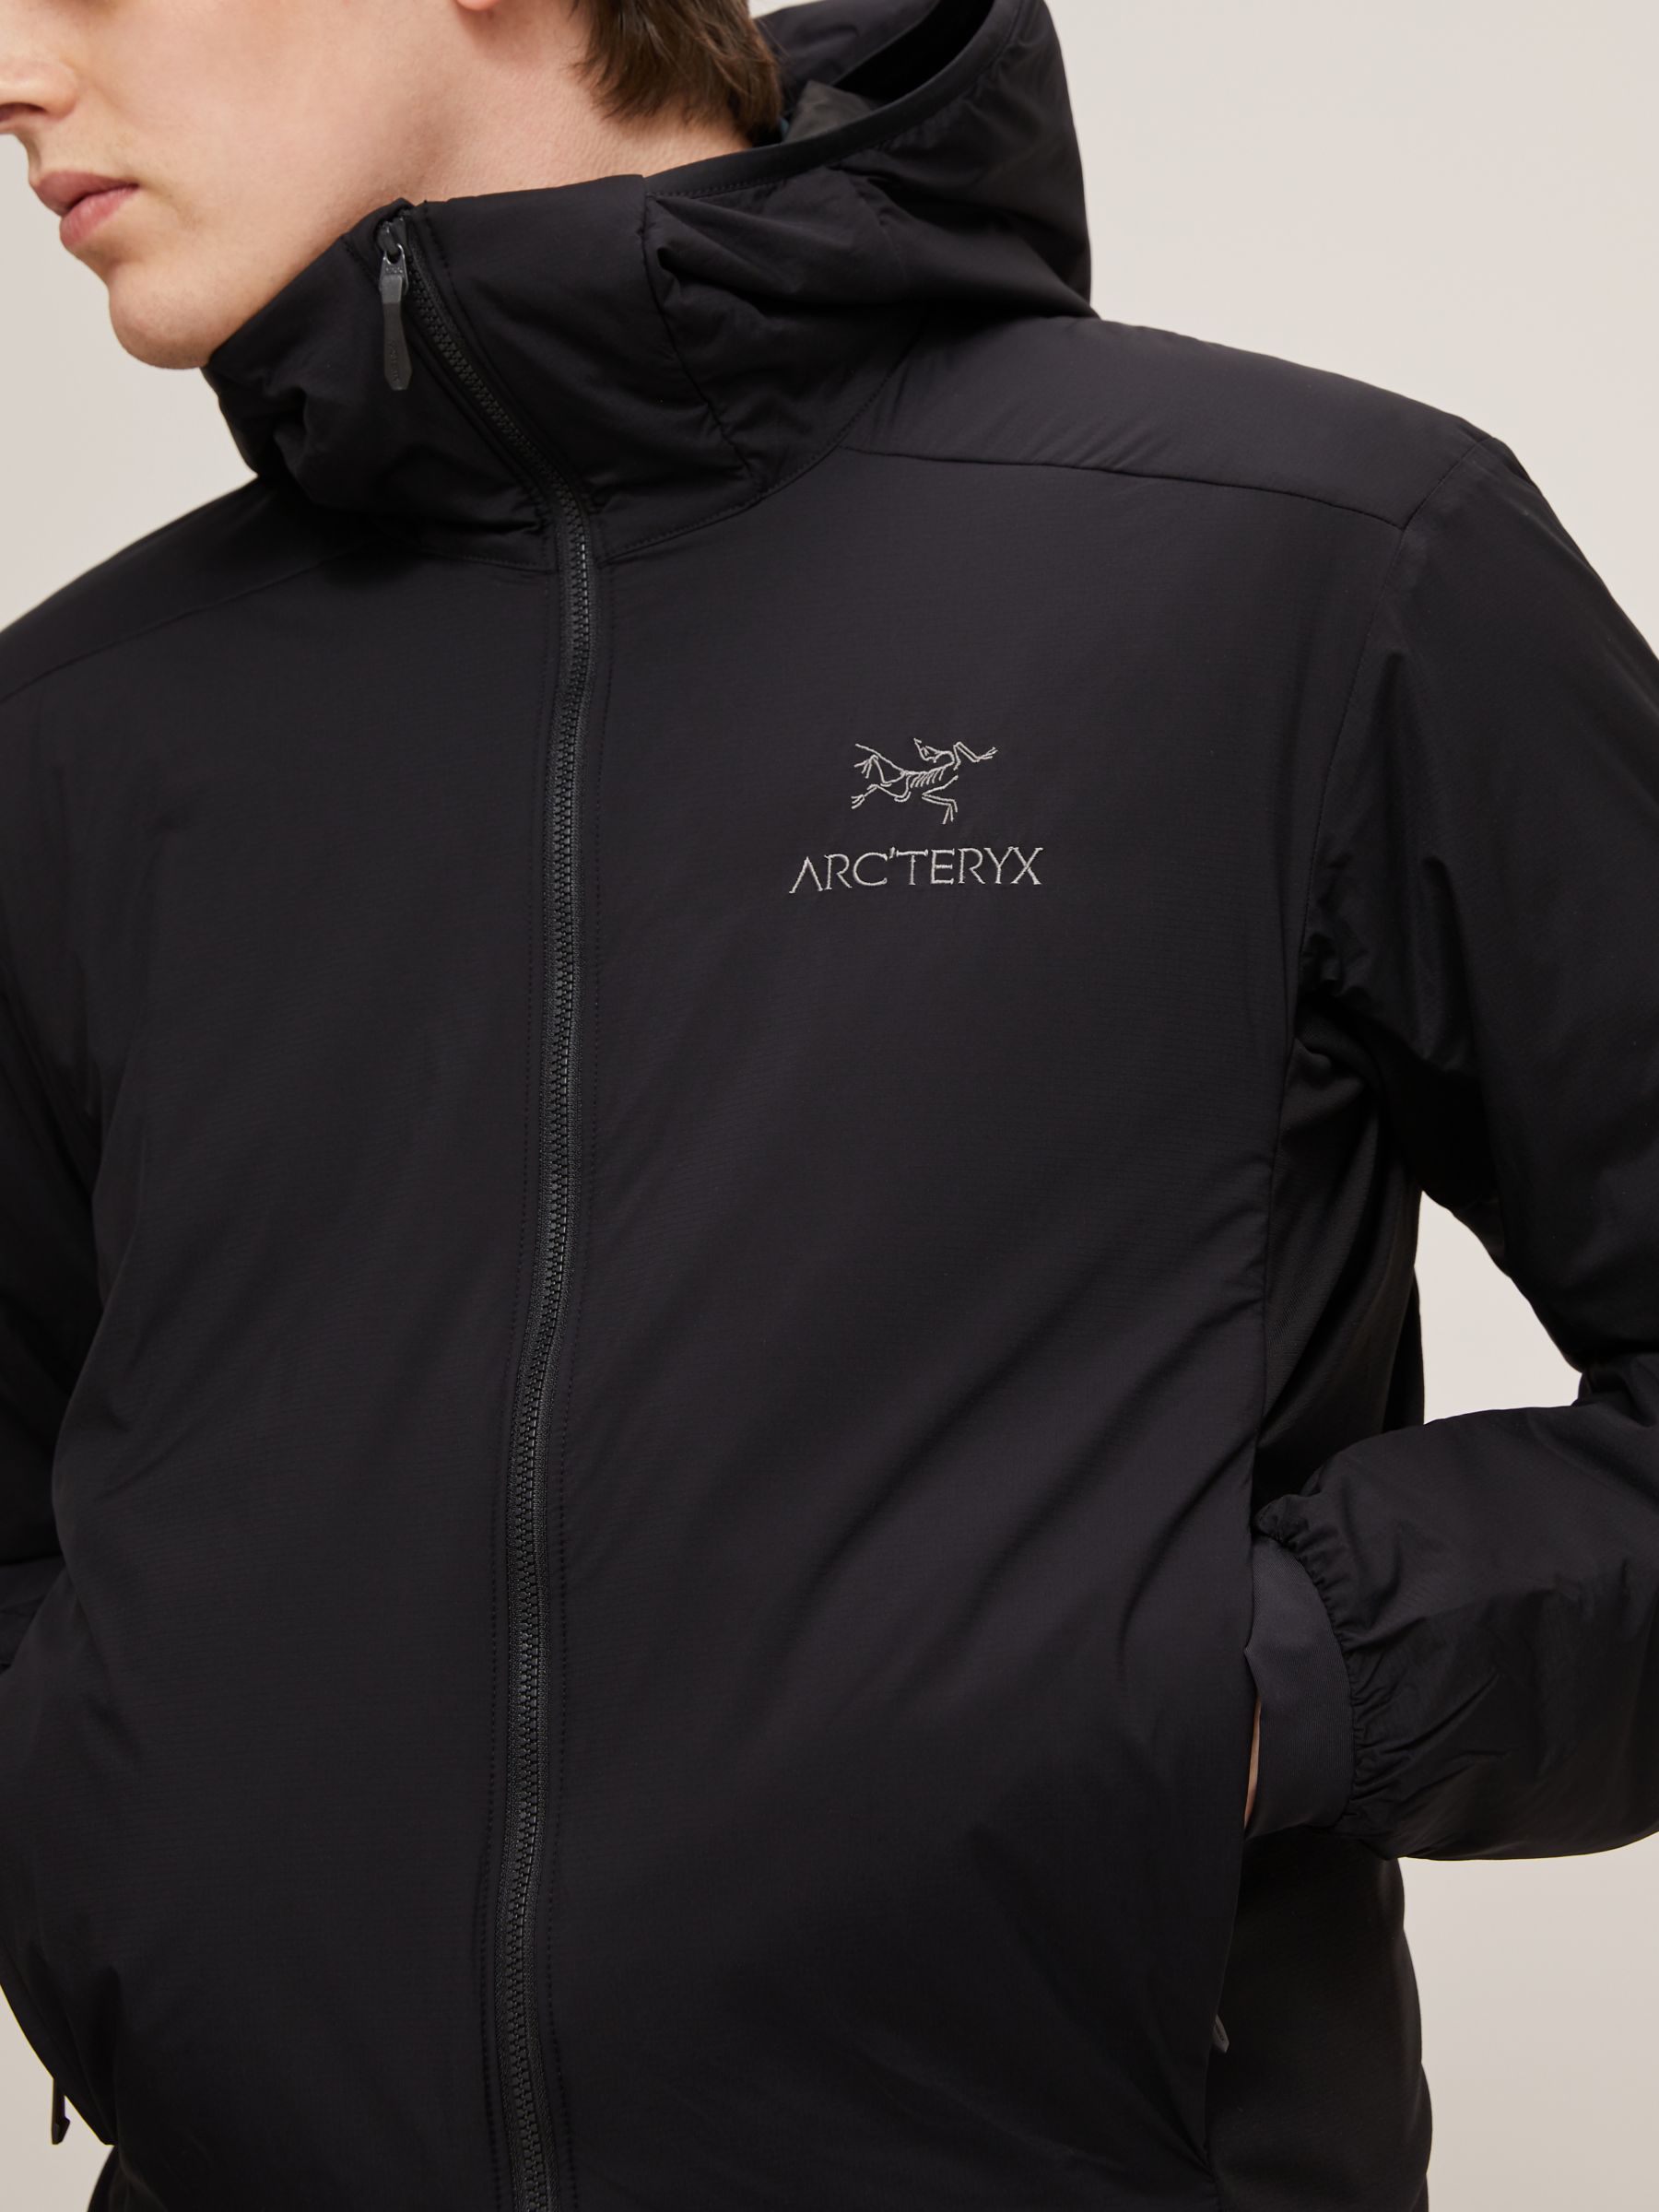 Arc'teryx Atom LT Men's Hooded Jacket, Black at John Lewis & Partners